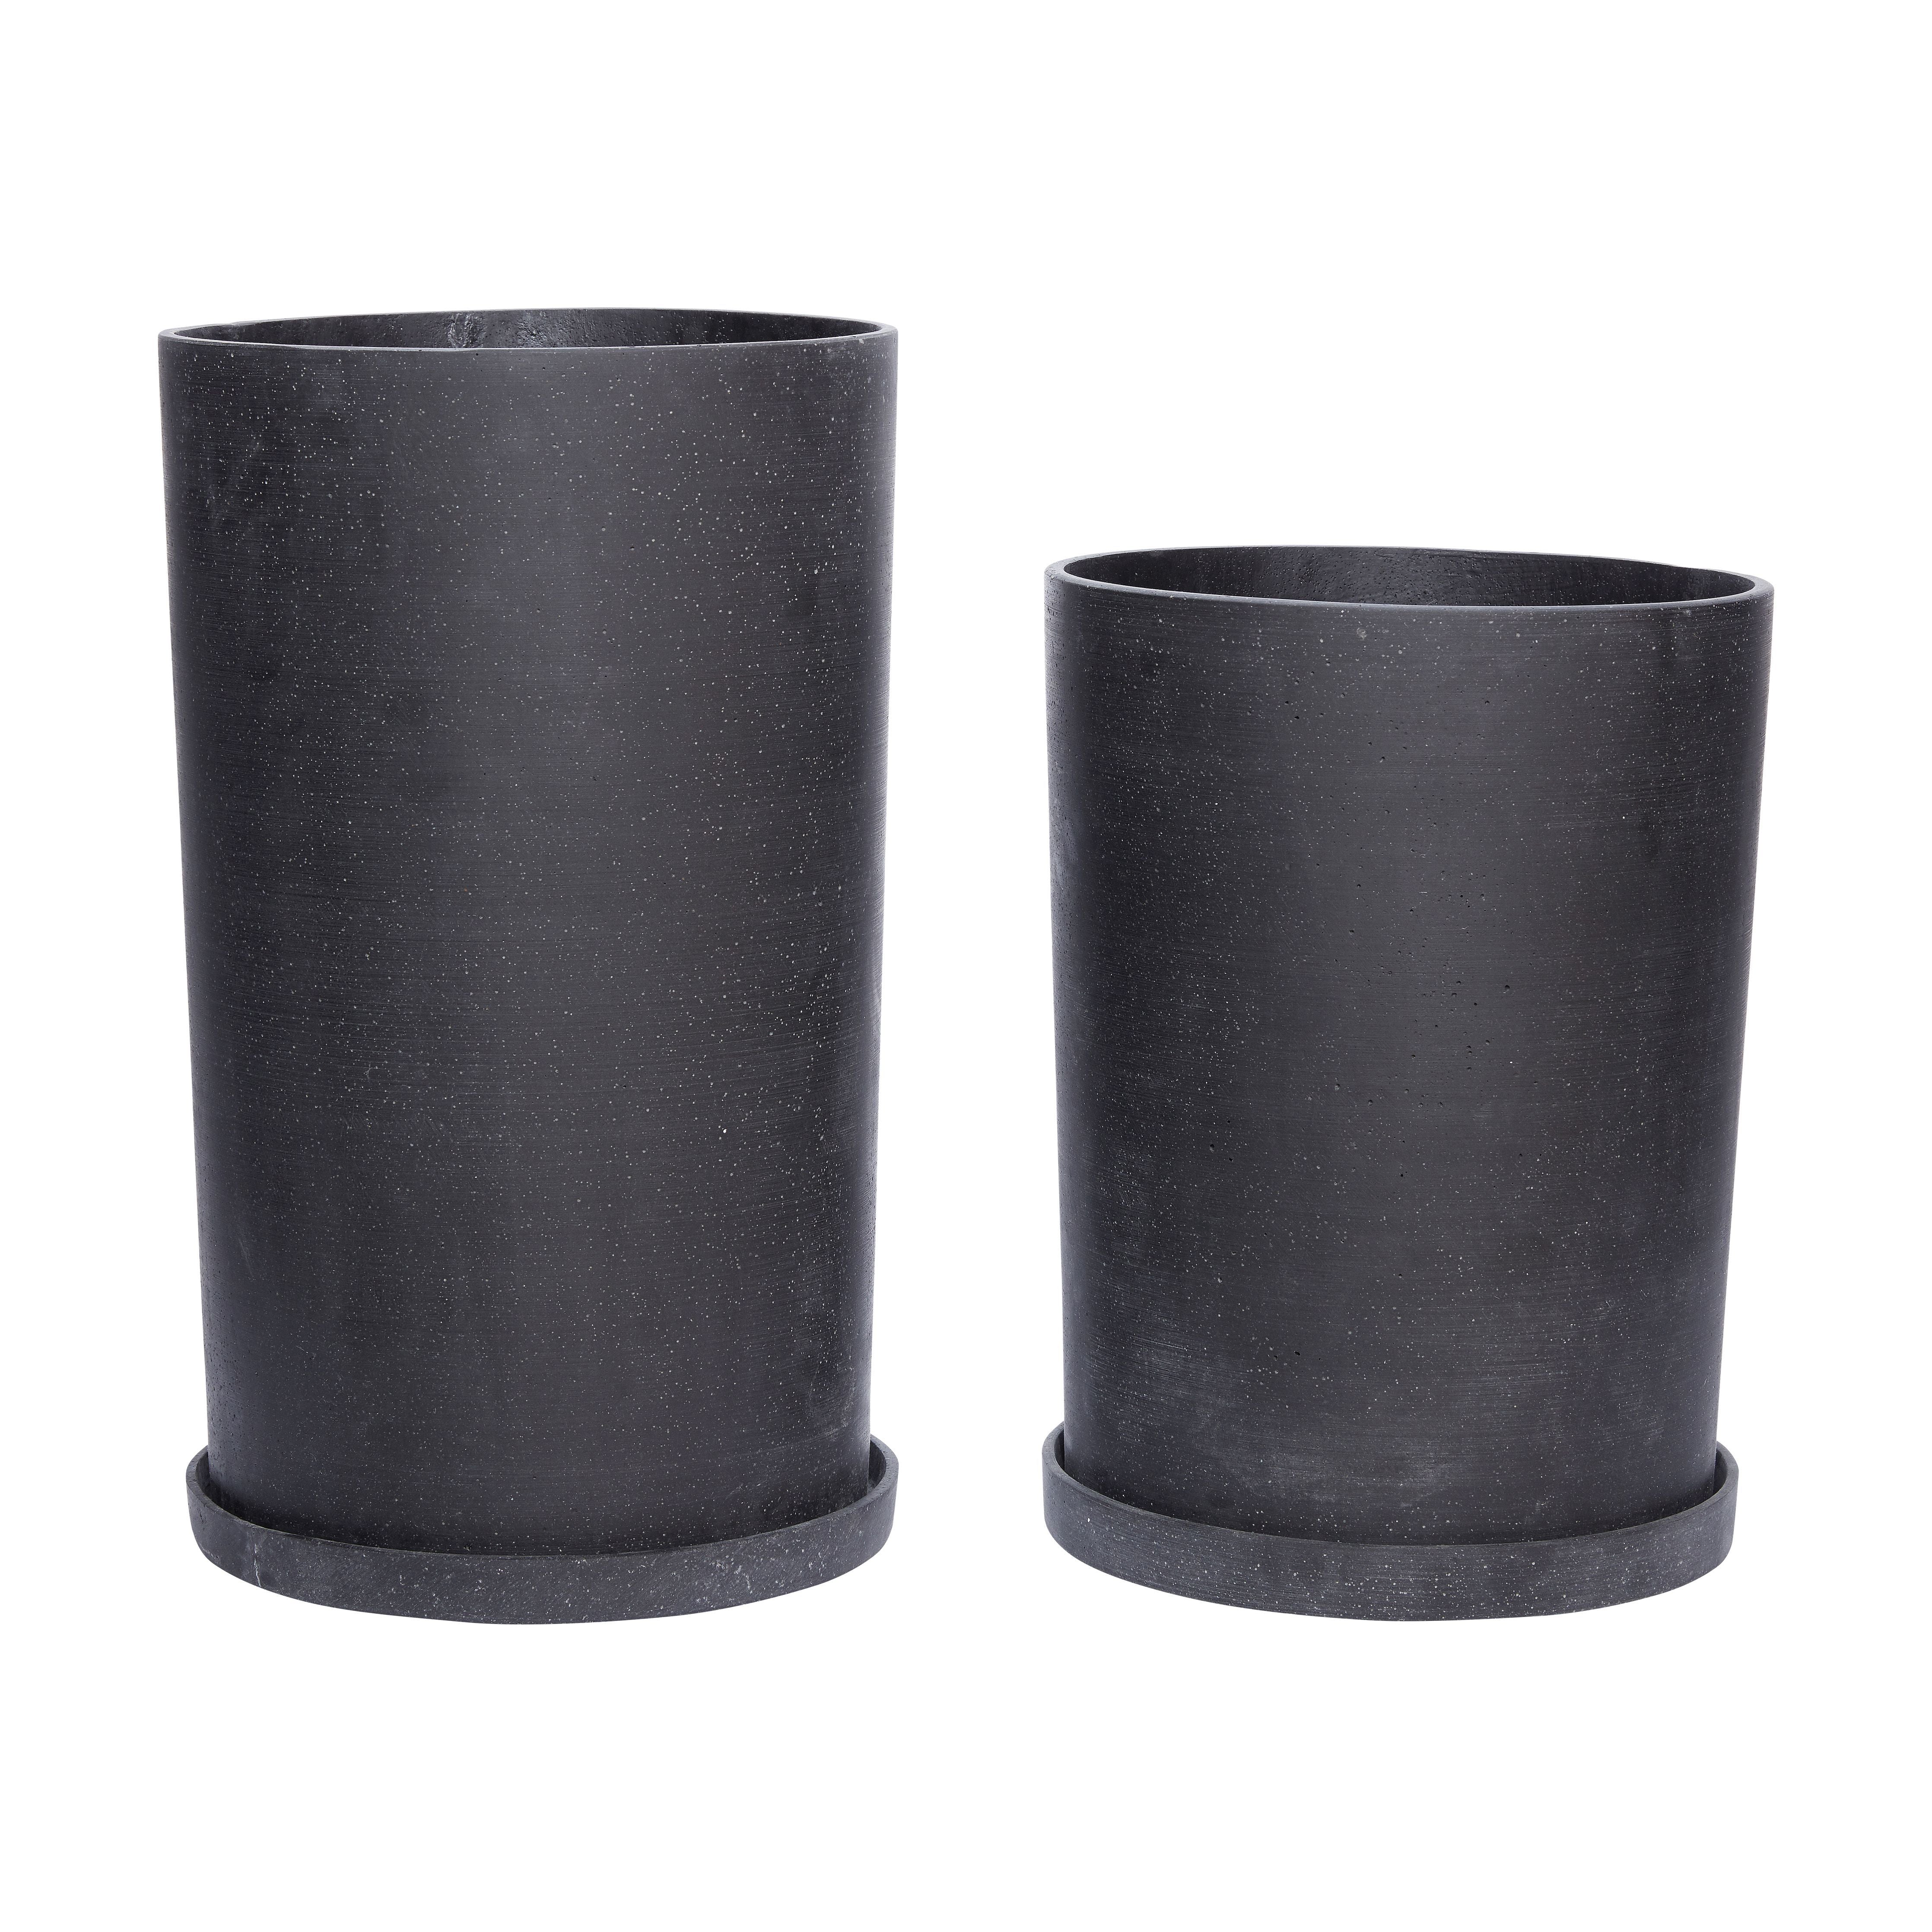 Hübsch Podium Pots Large Set Of 2, Black